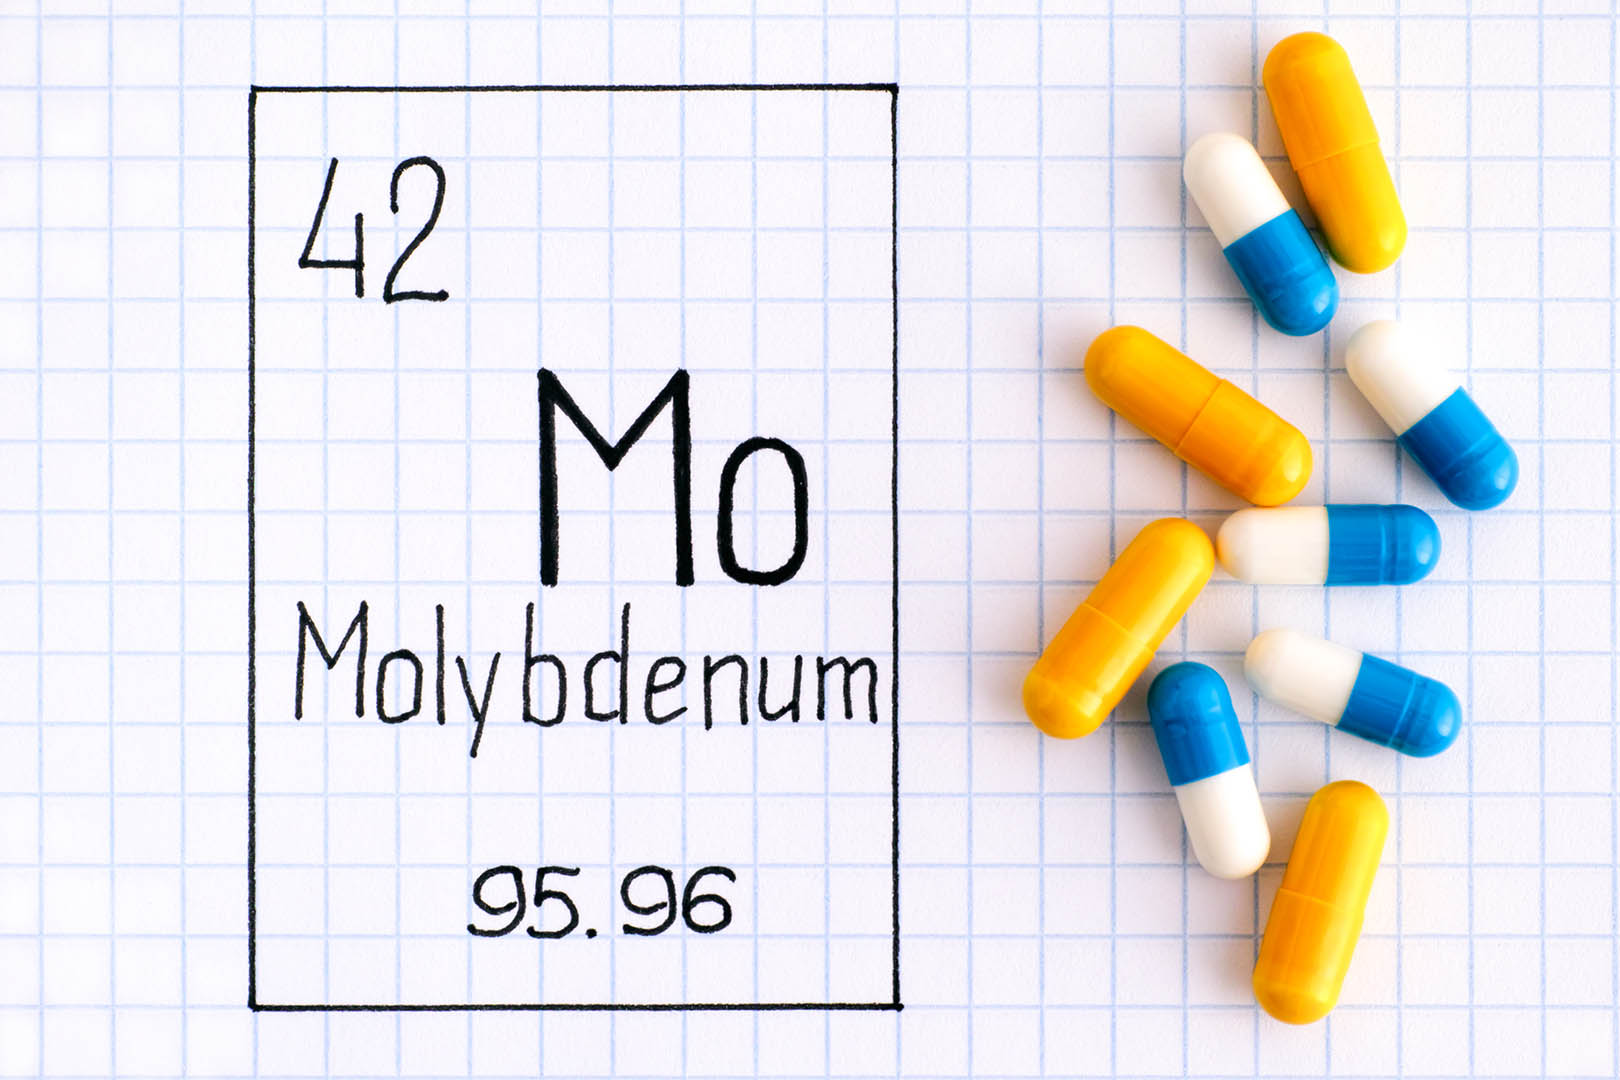 mineral-molybdenum-adalah